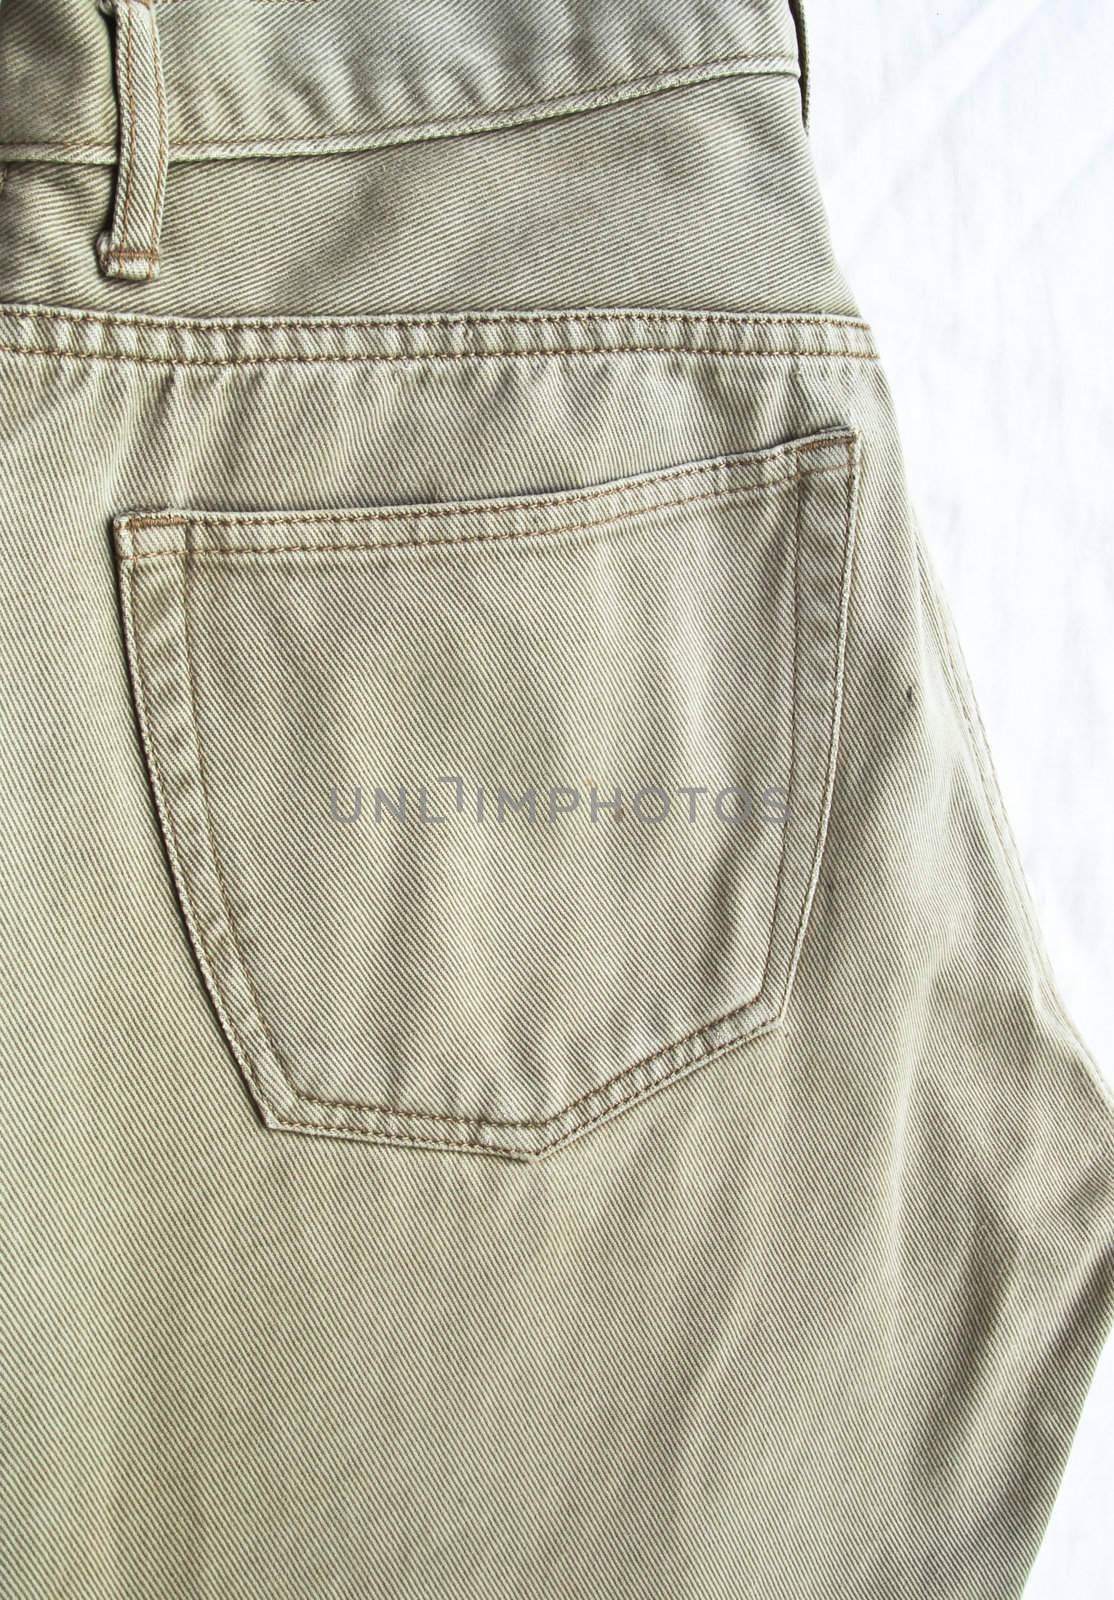 Back pocket on khaki jean pants by gururugu